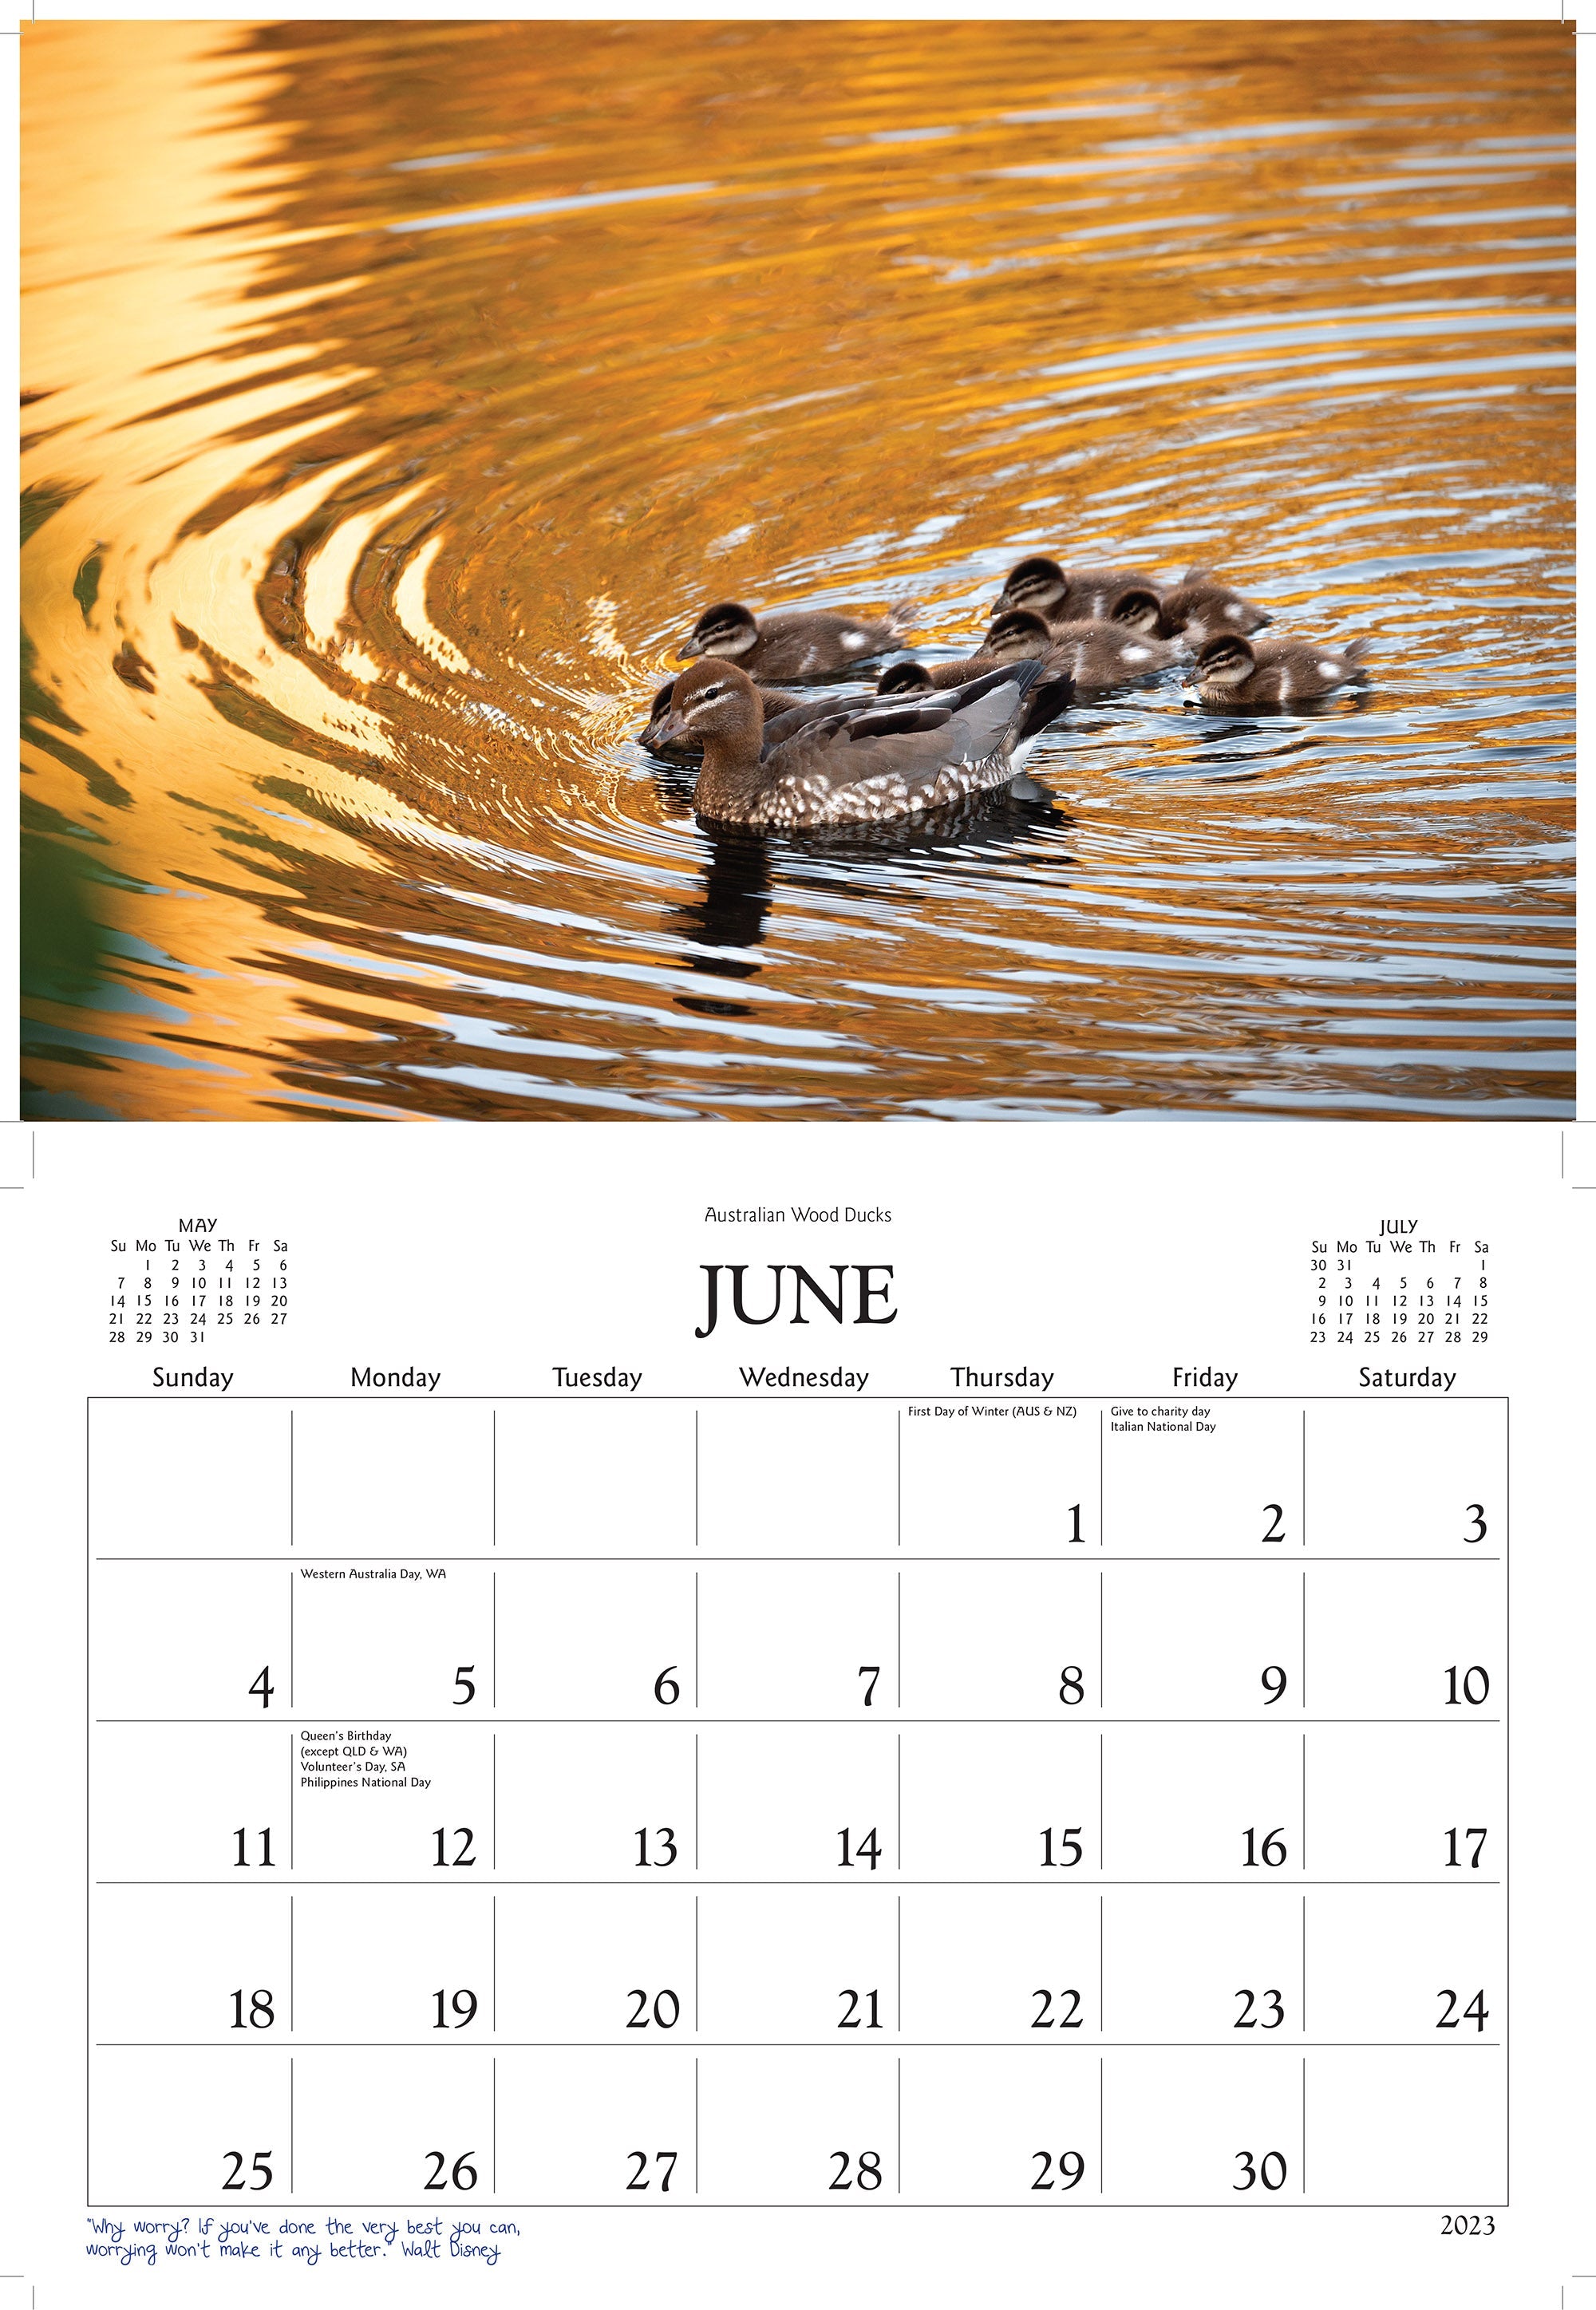 2023 Birds of Australia by David Messent - Horizontal Wall Calendar